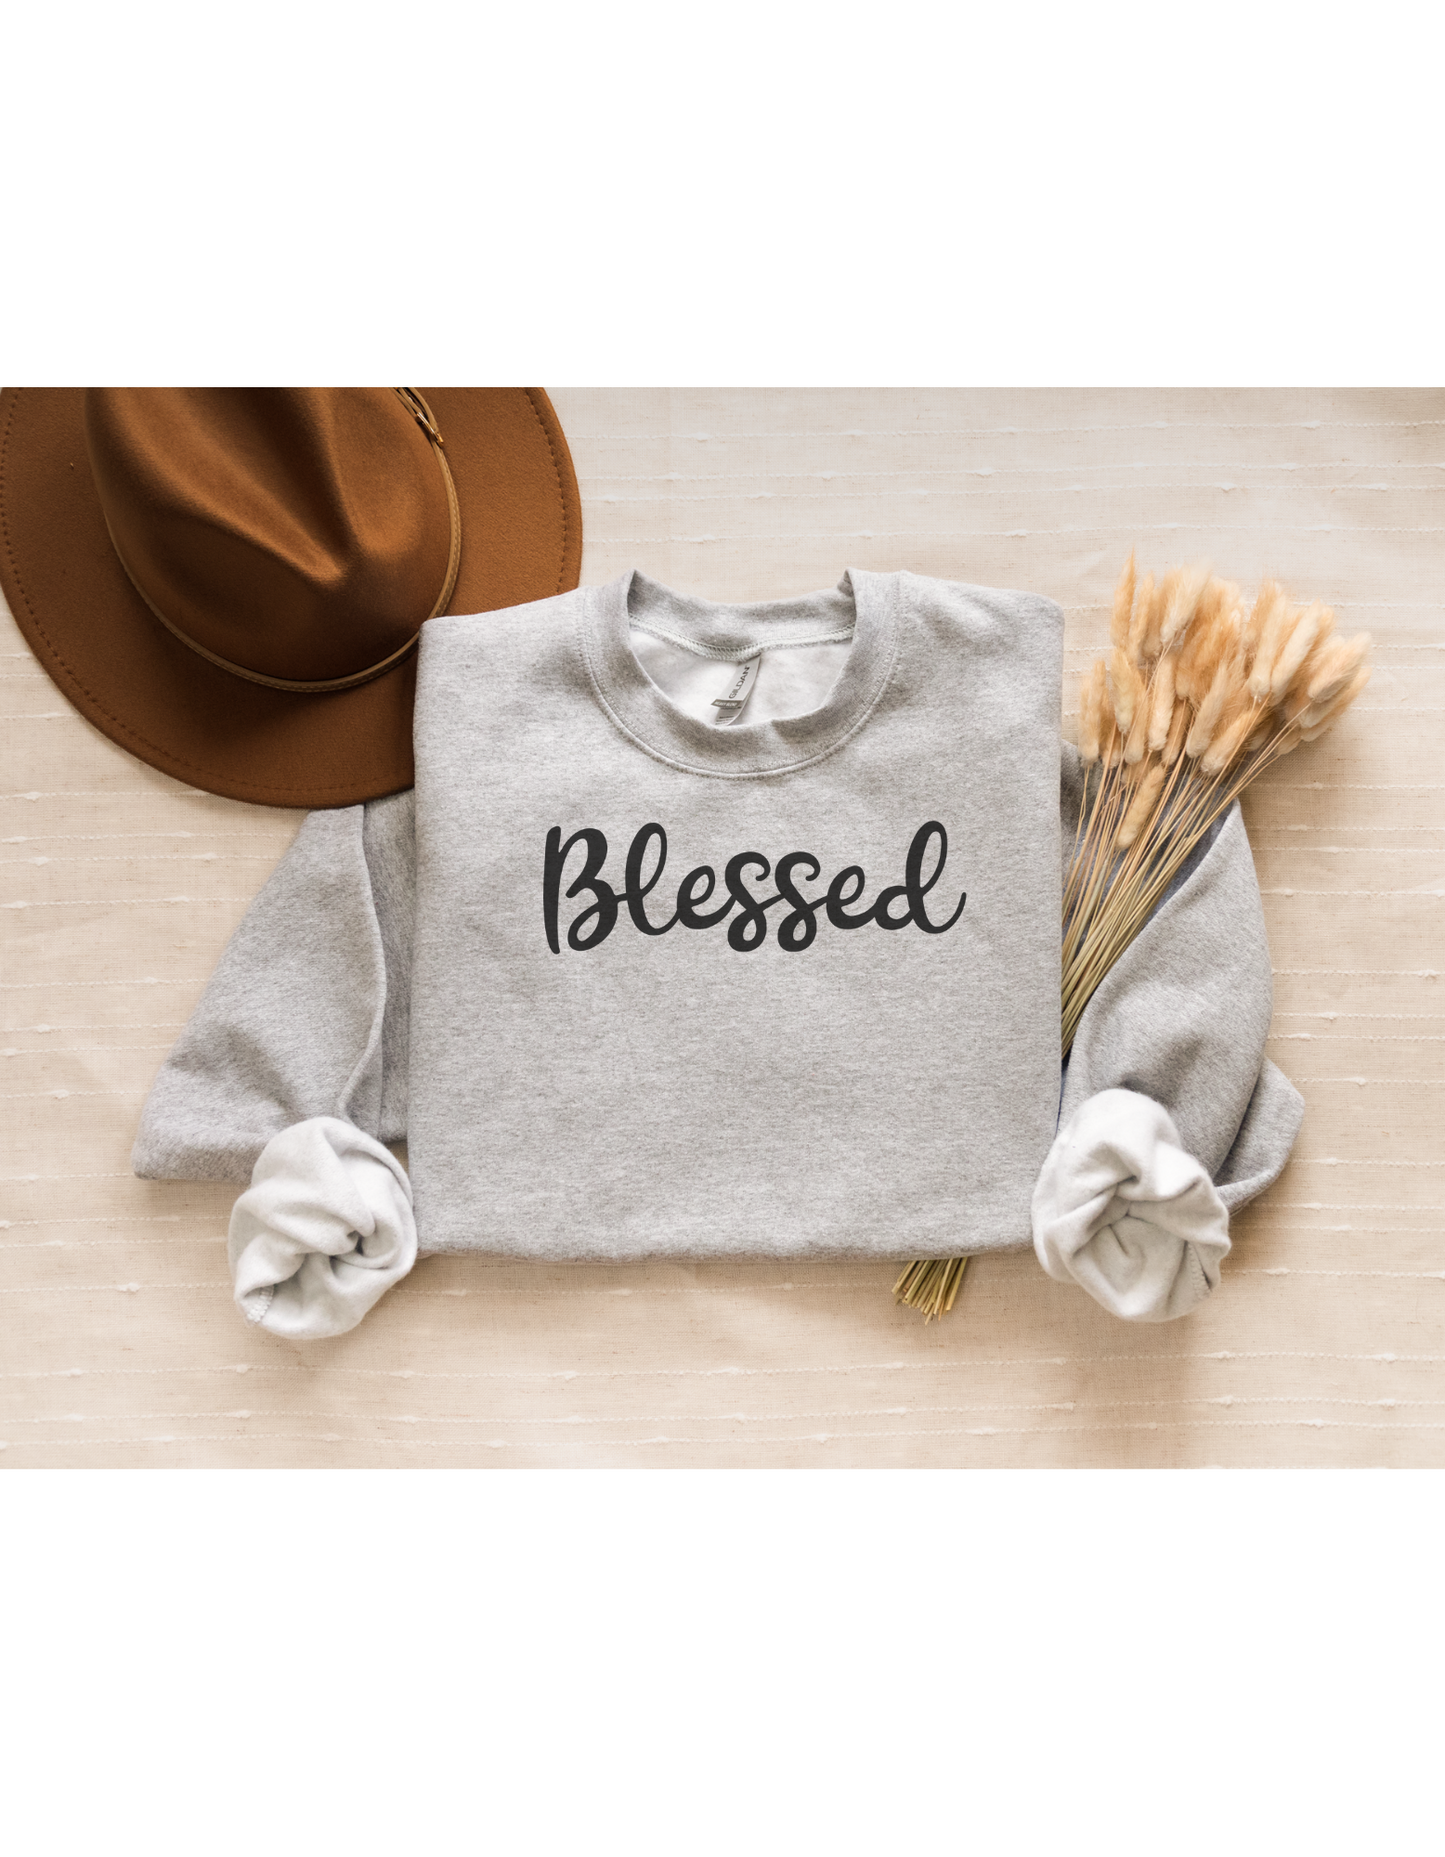 Blessed Sweatshirt, Faith Shirt, Christian Sweatshirt